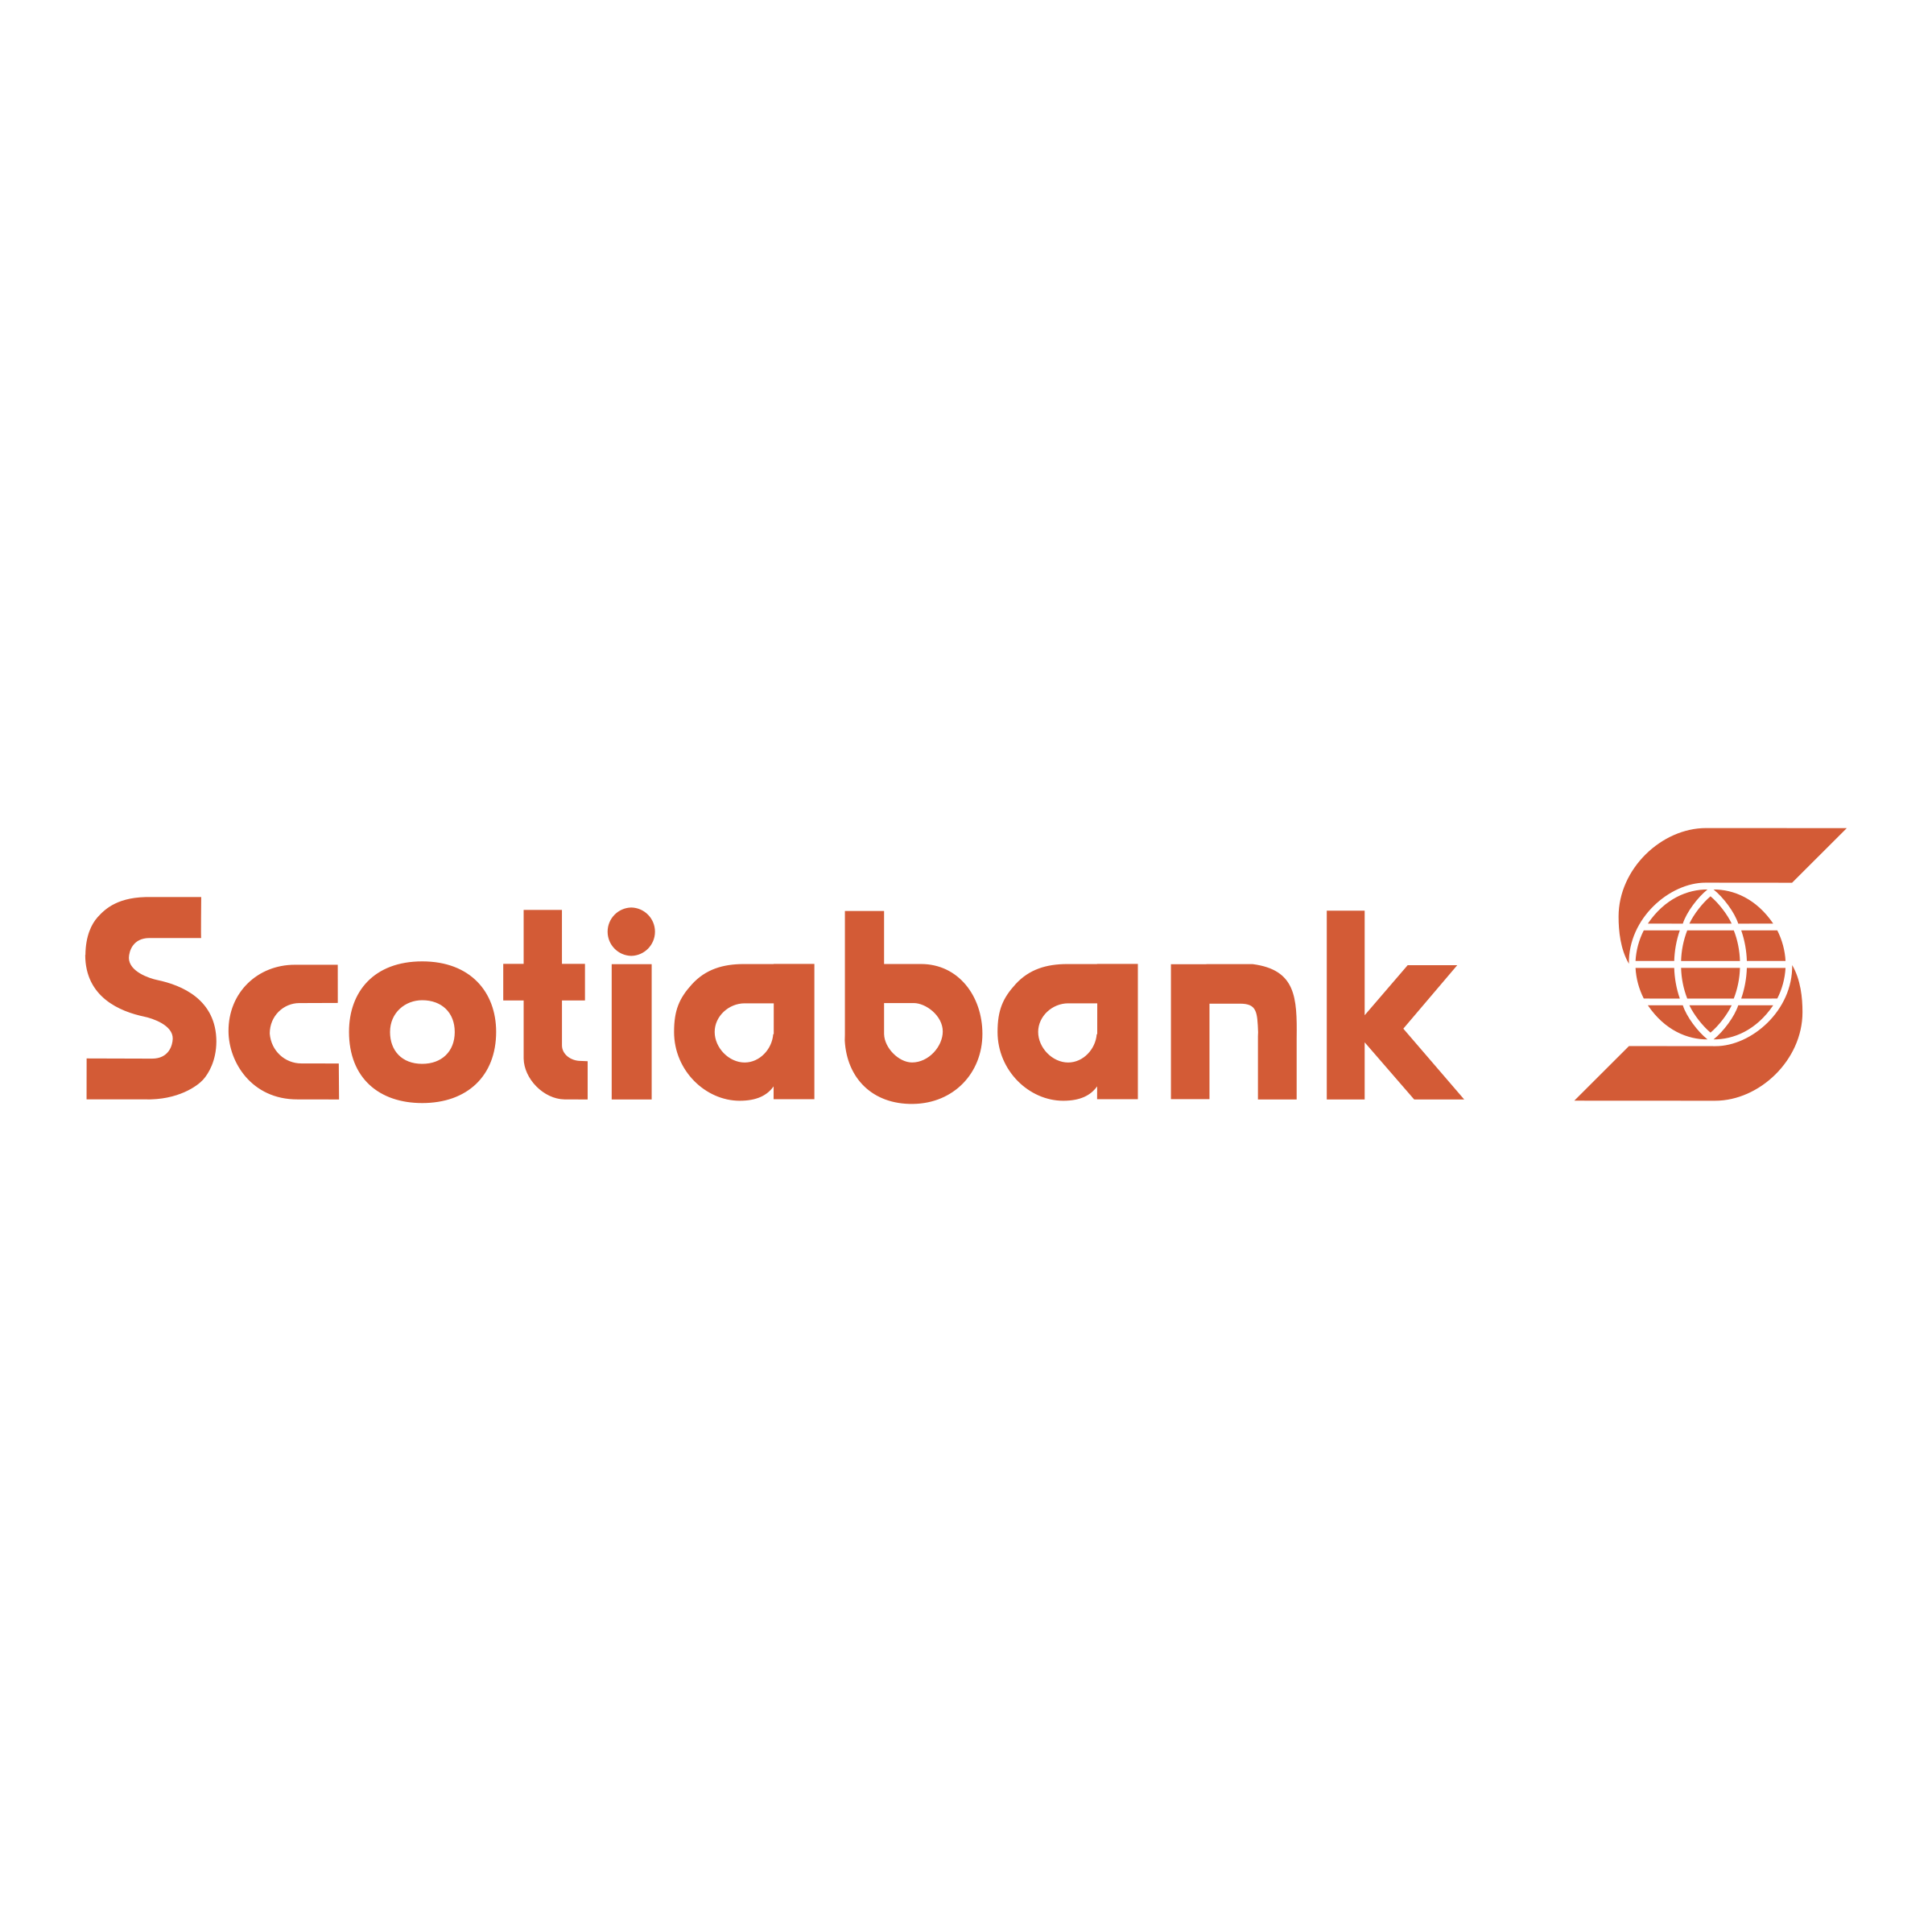 Scotiabank Logo - Scotiabank Logo PNG Transparent & SVG Vector - Freebie Supply